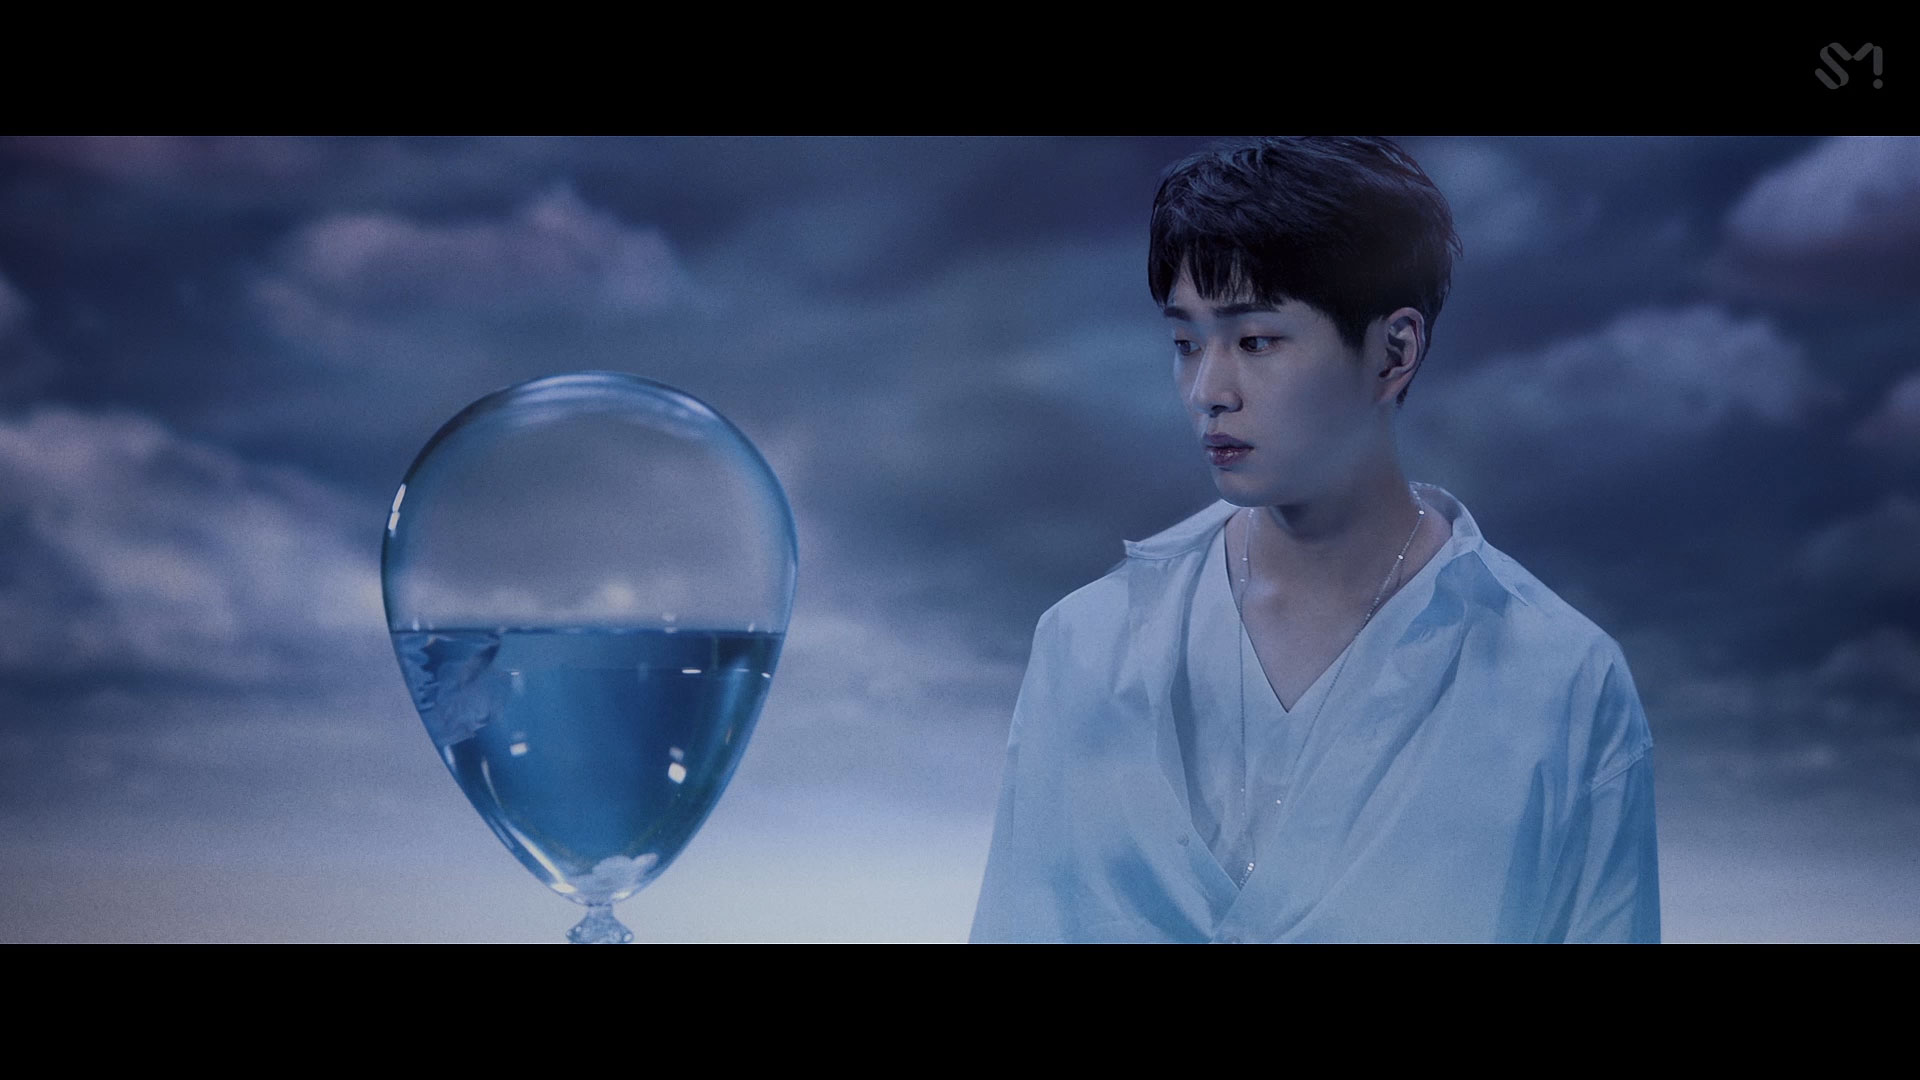 ONEW 온유 'Blue' MV